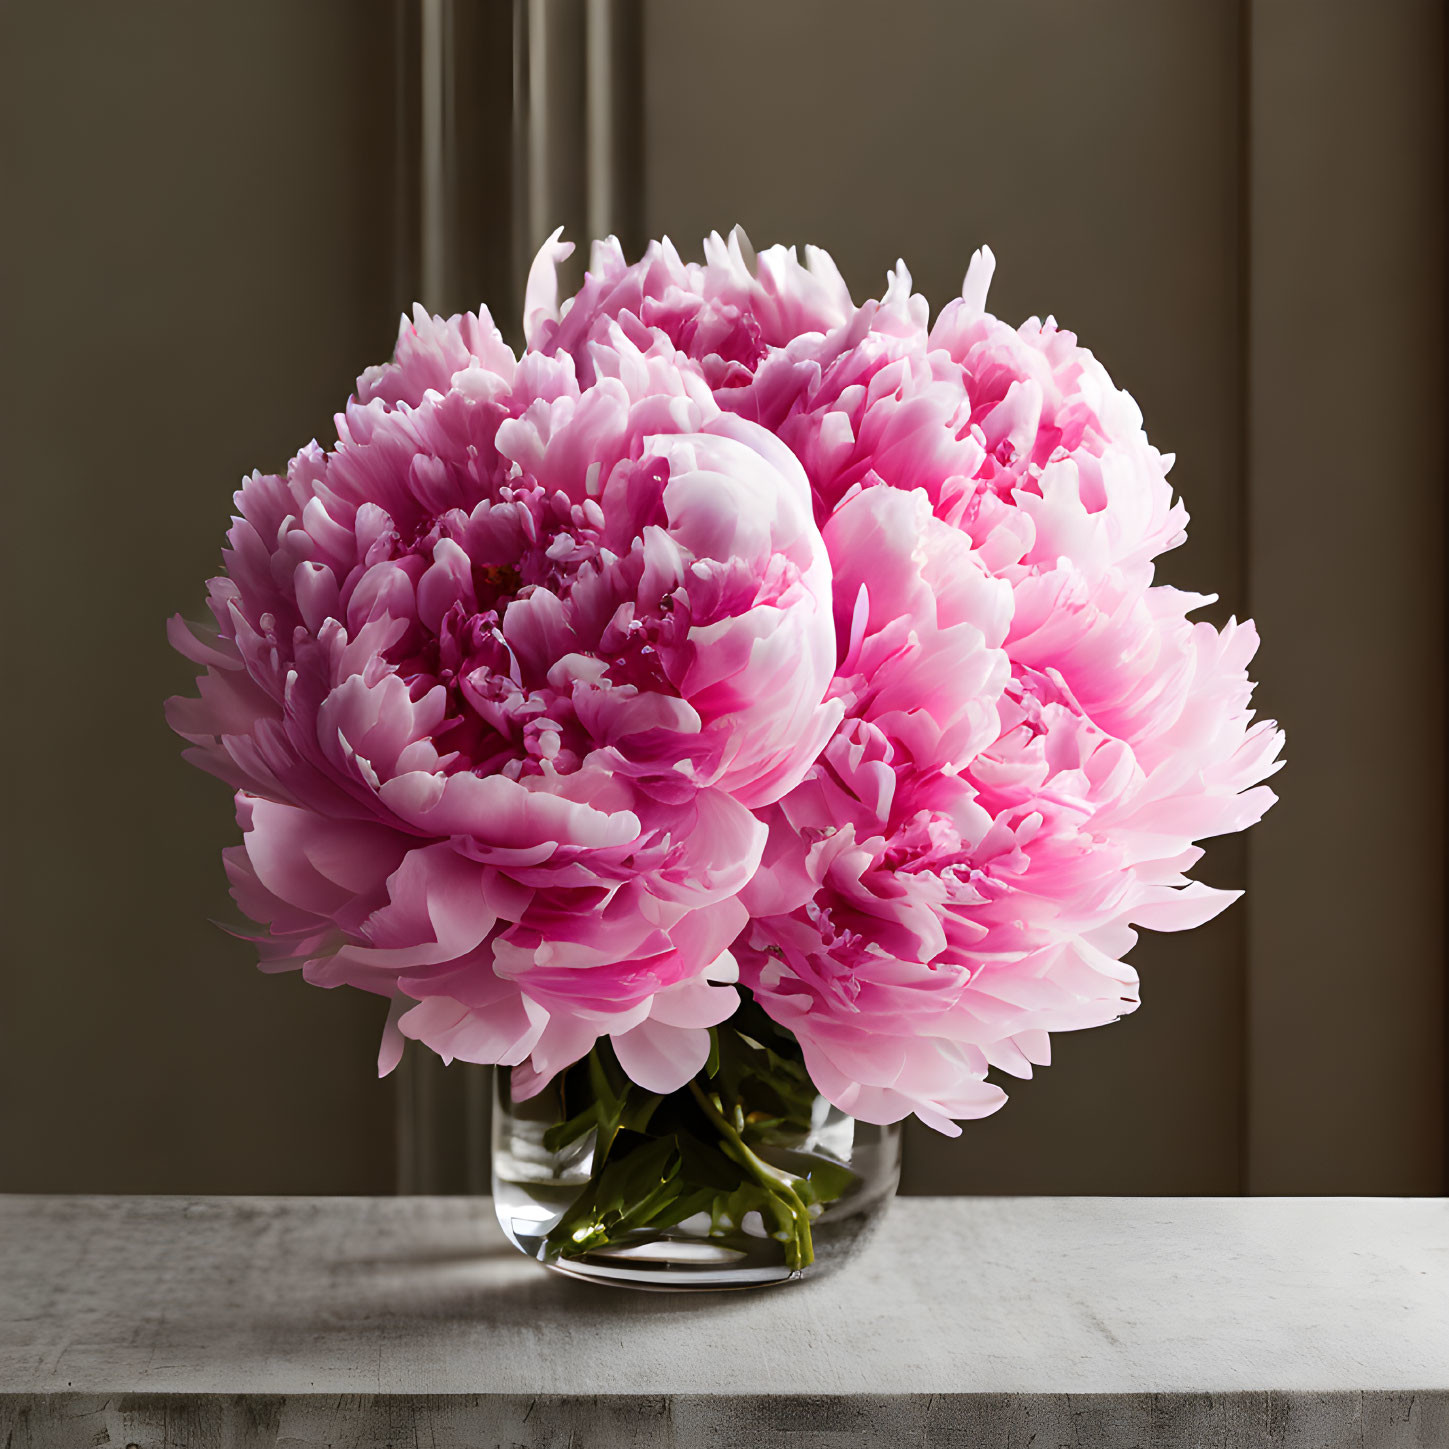 Full Blooming Pink Peonies in Glass Vase on Table